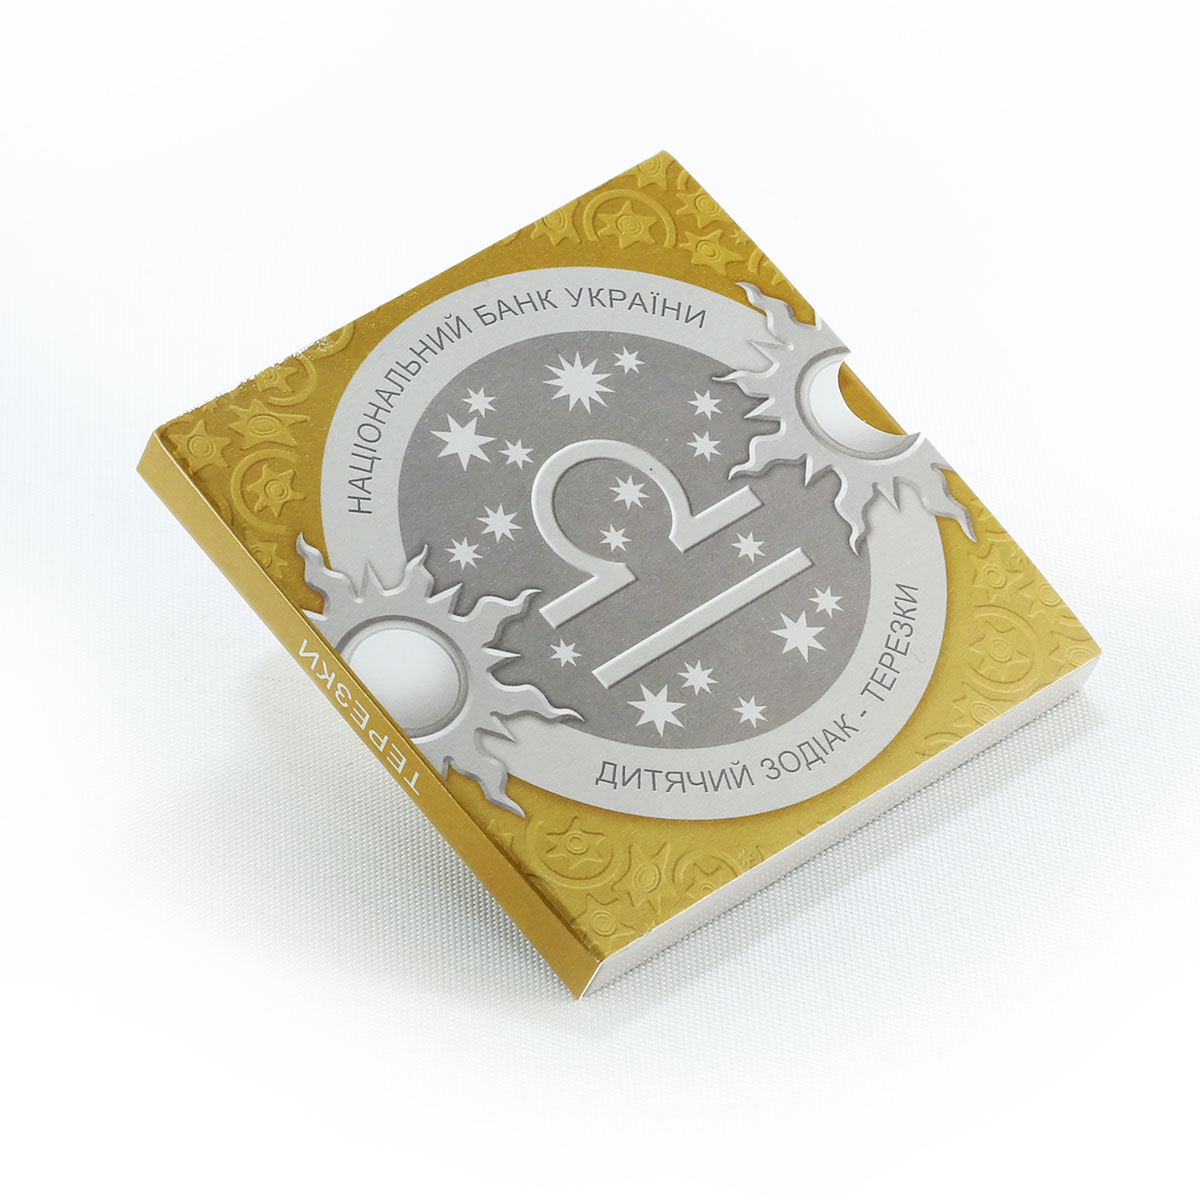 Ukraine 2 hryvnia Libra Little Scales Zodiac silver coin 2015